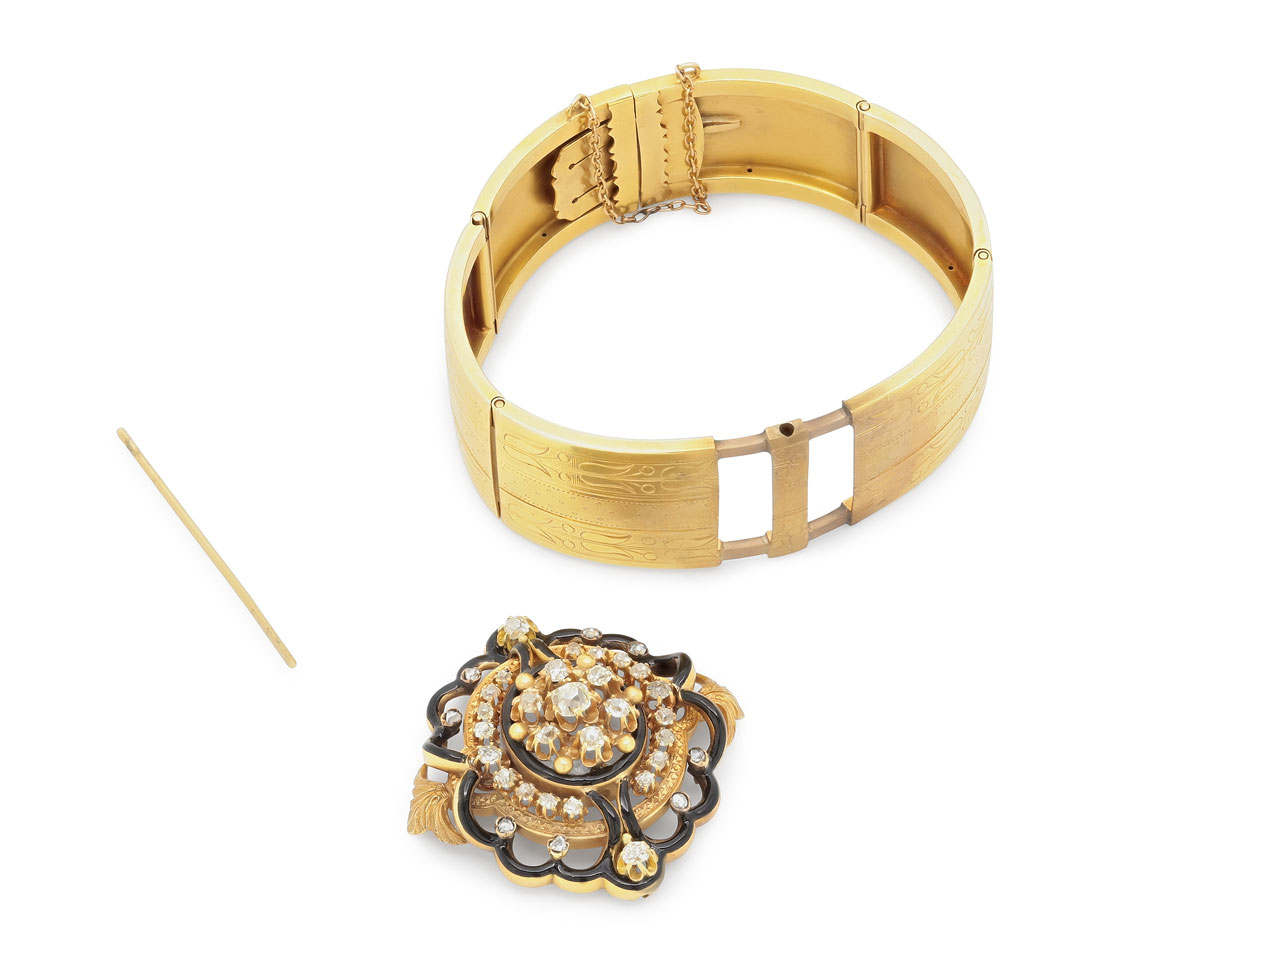 Antique Victorian Diamond and Enamel Bracelet in 18K Gold